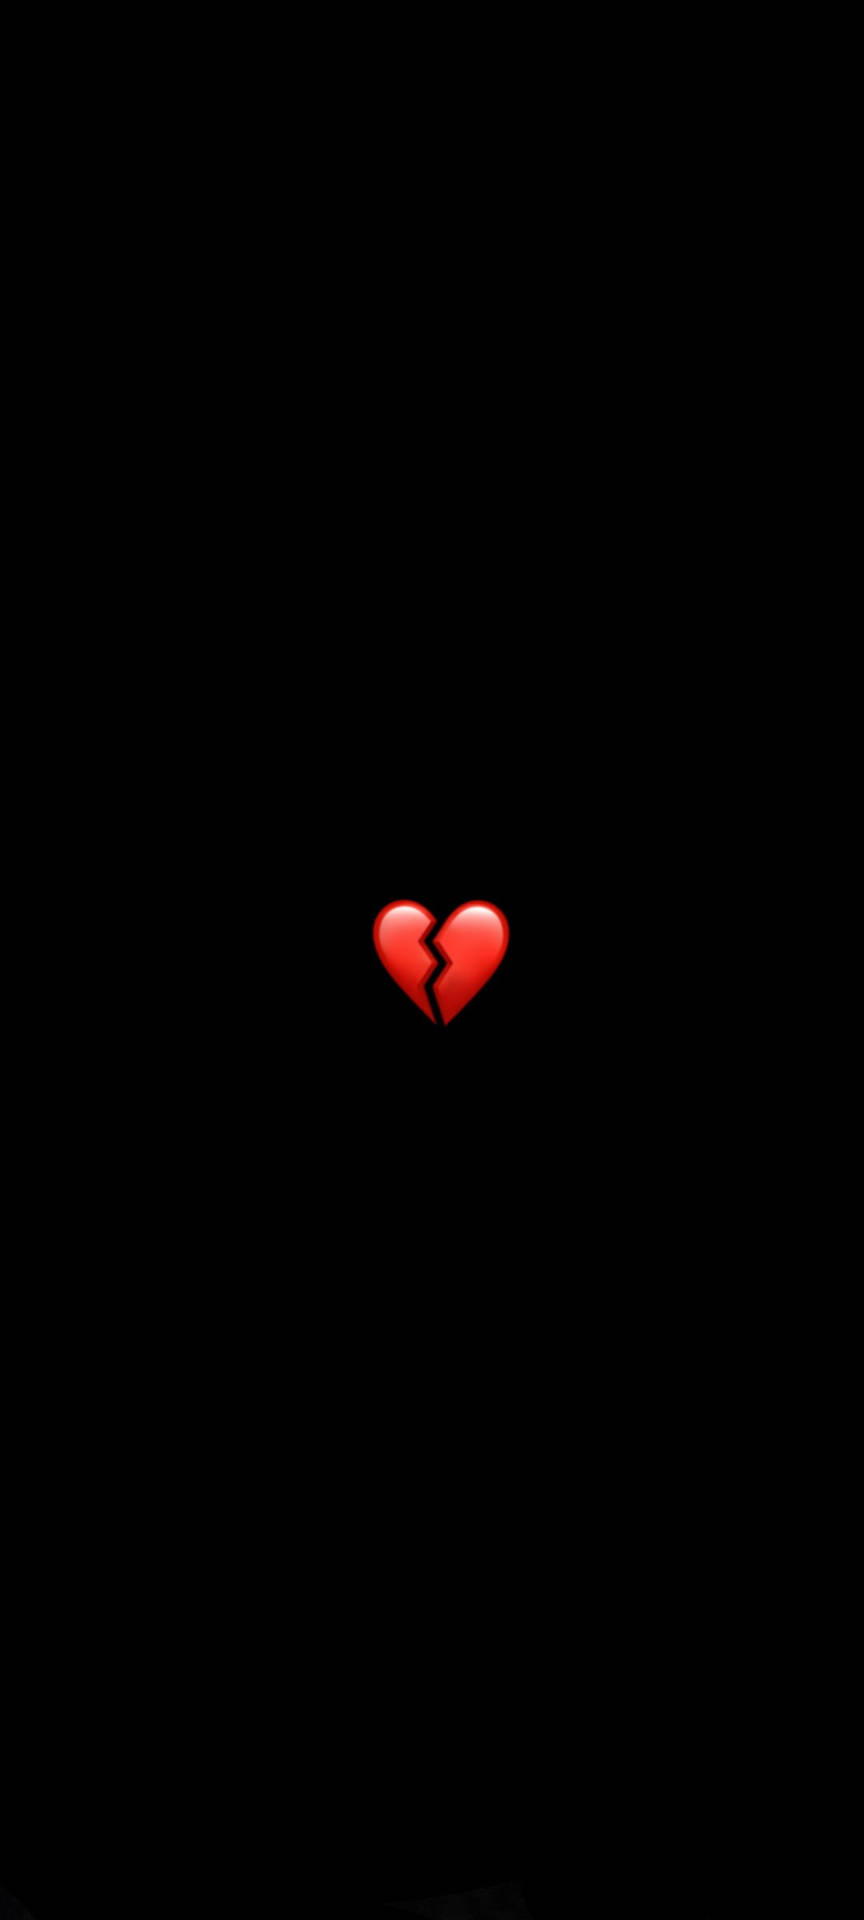 Emoji Of A Broken Heart Black Background